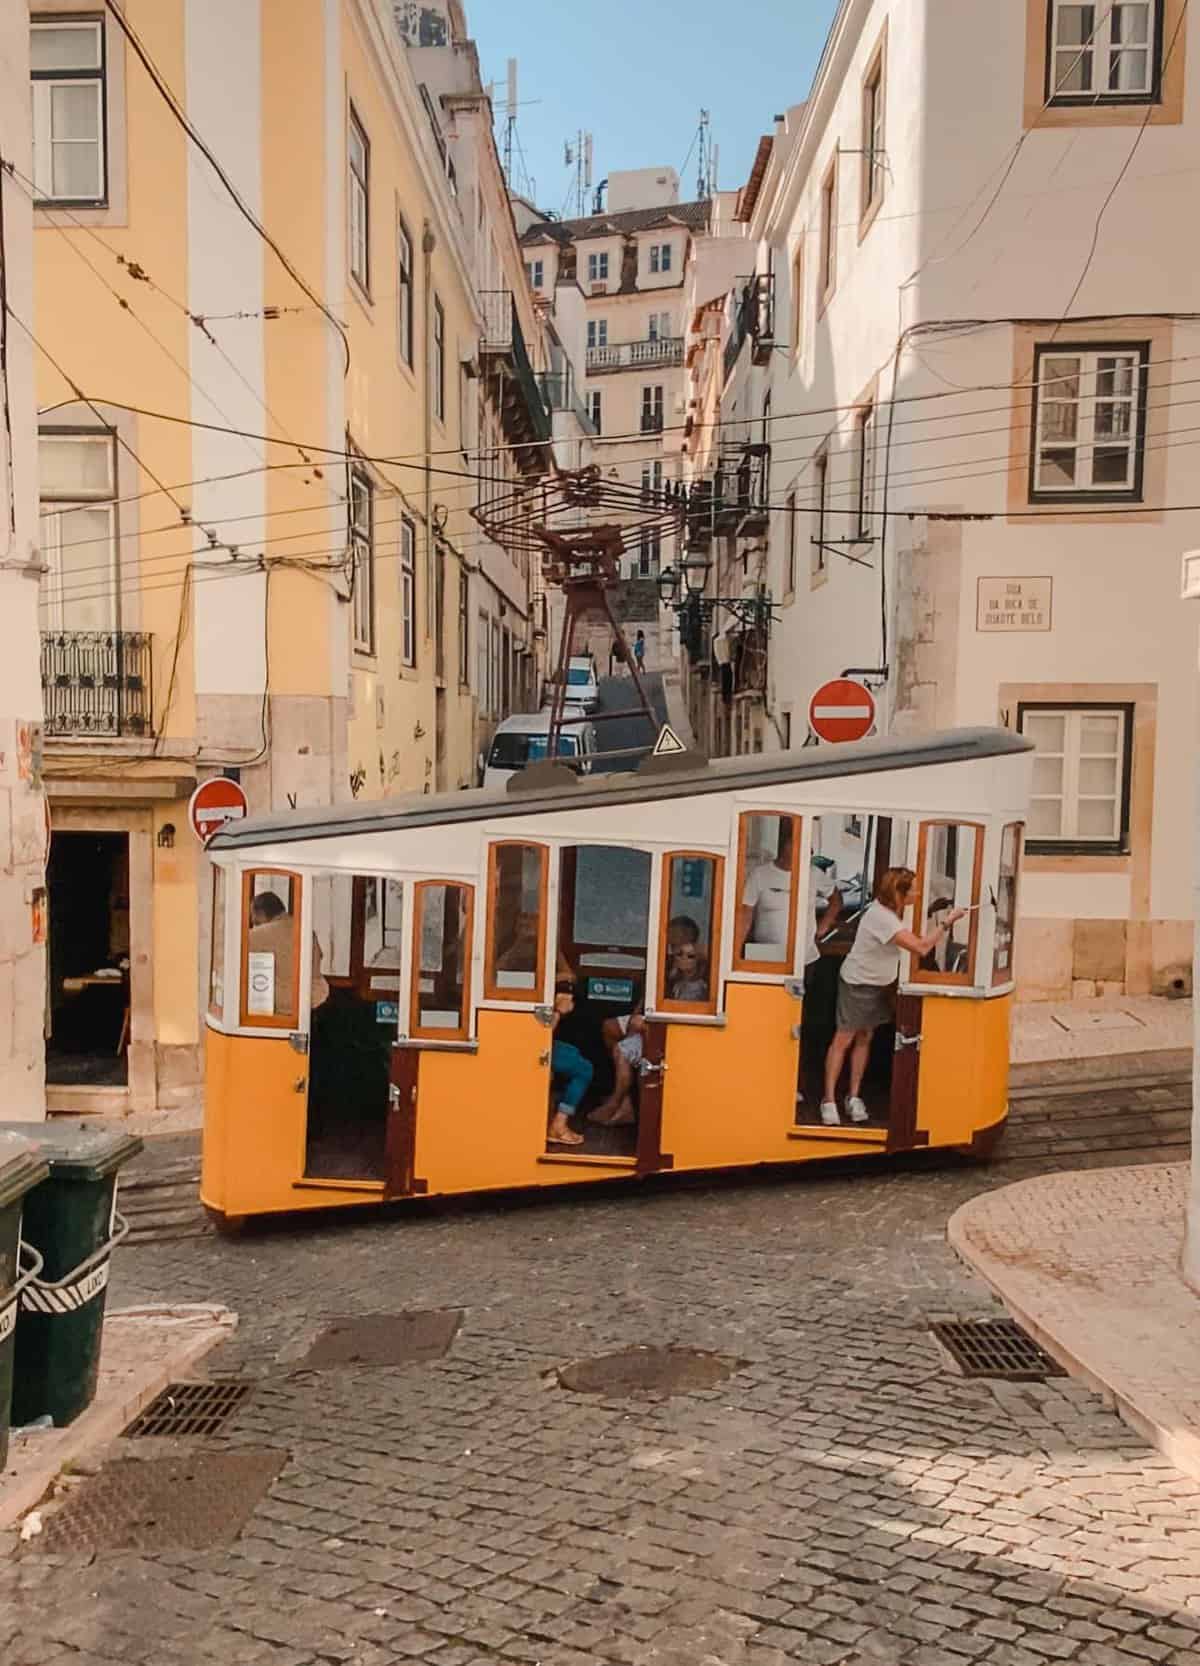 Lisbon's historic tram